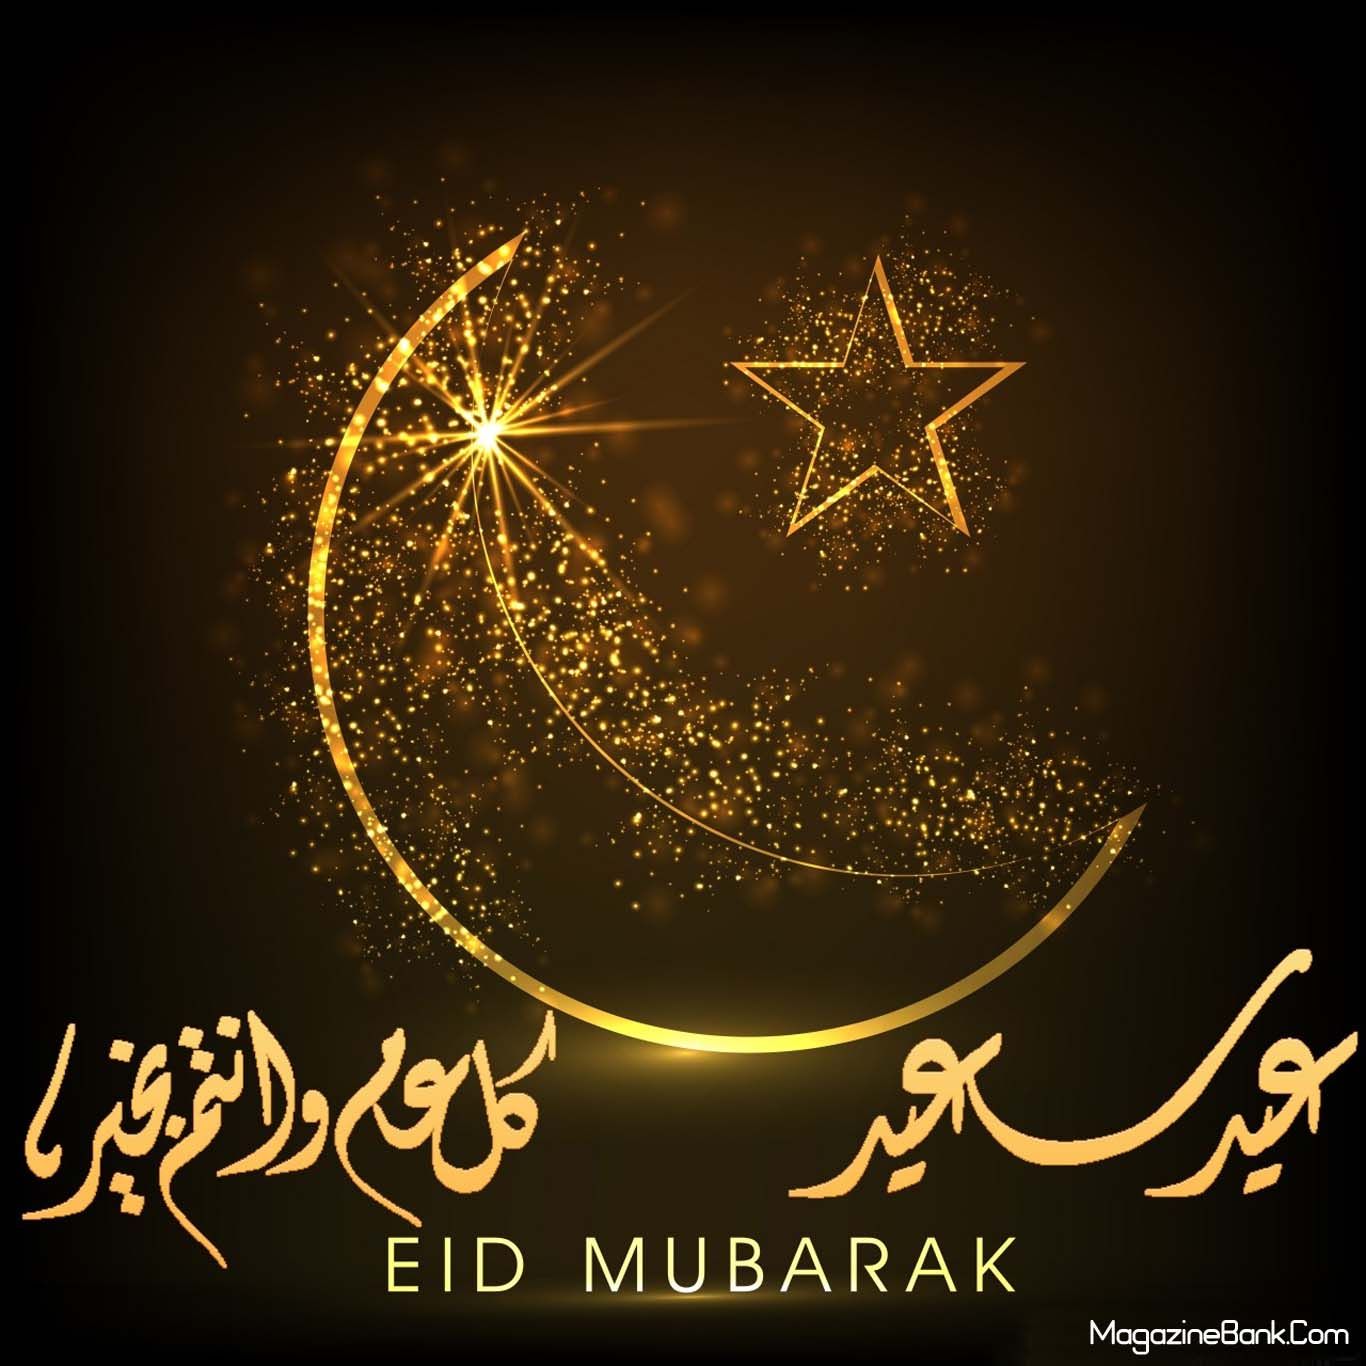 Eid mubarak images hd